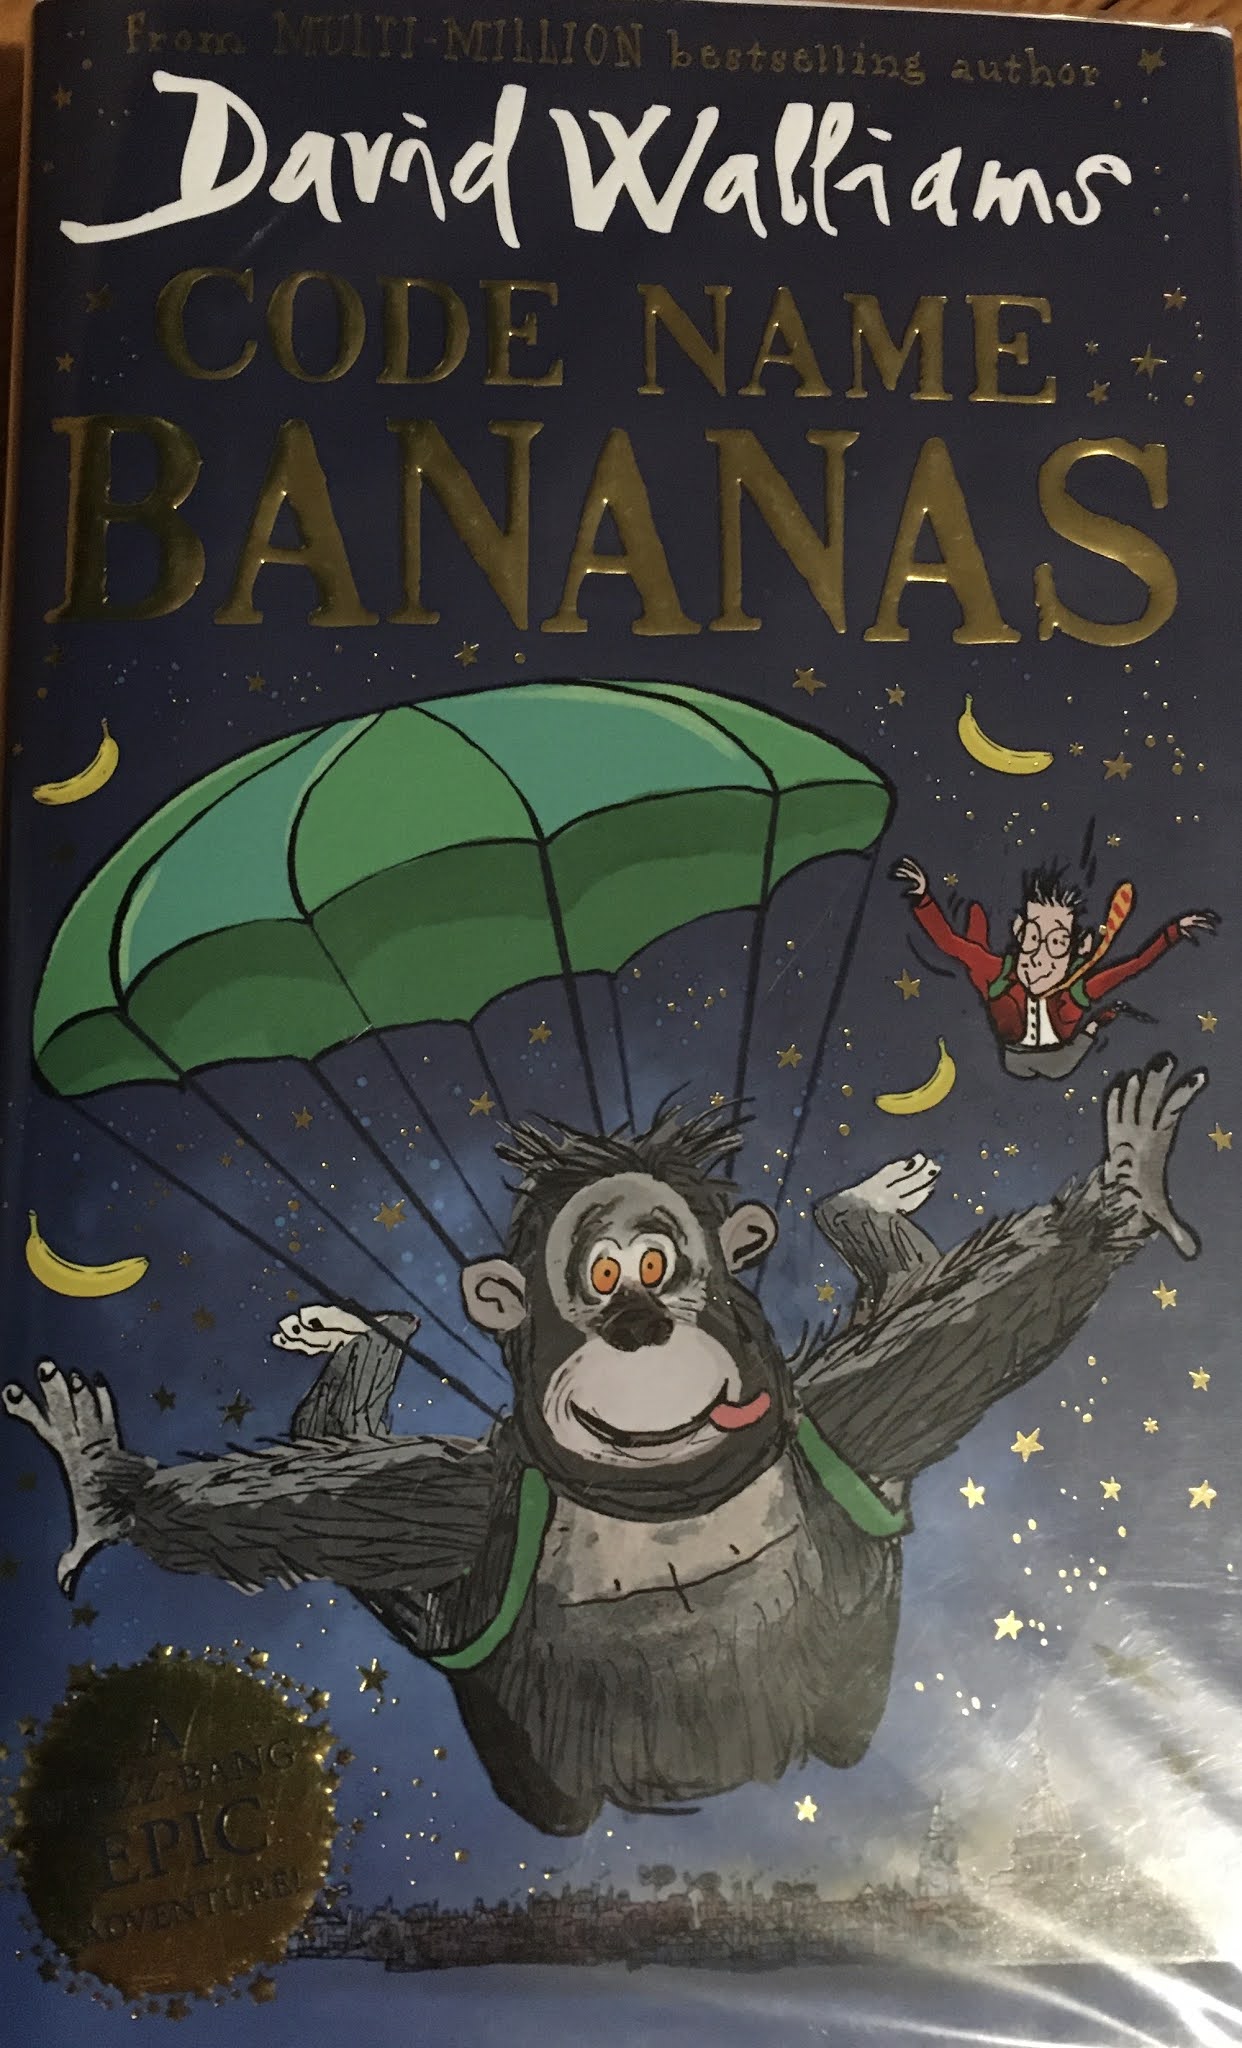 book review on code name bananas